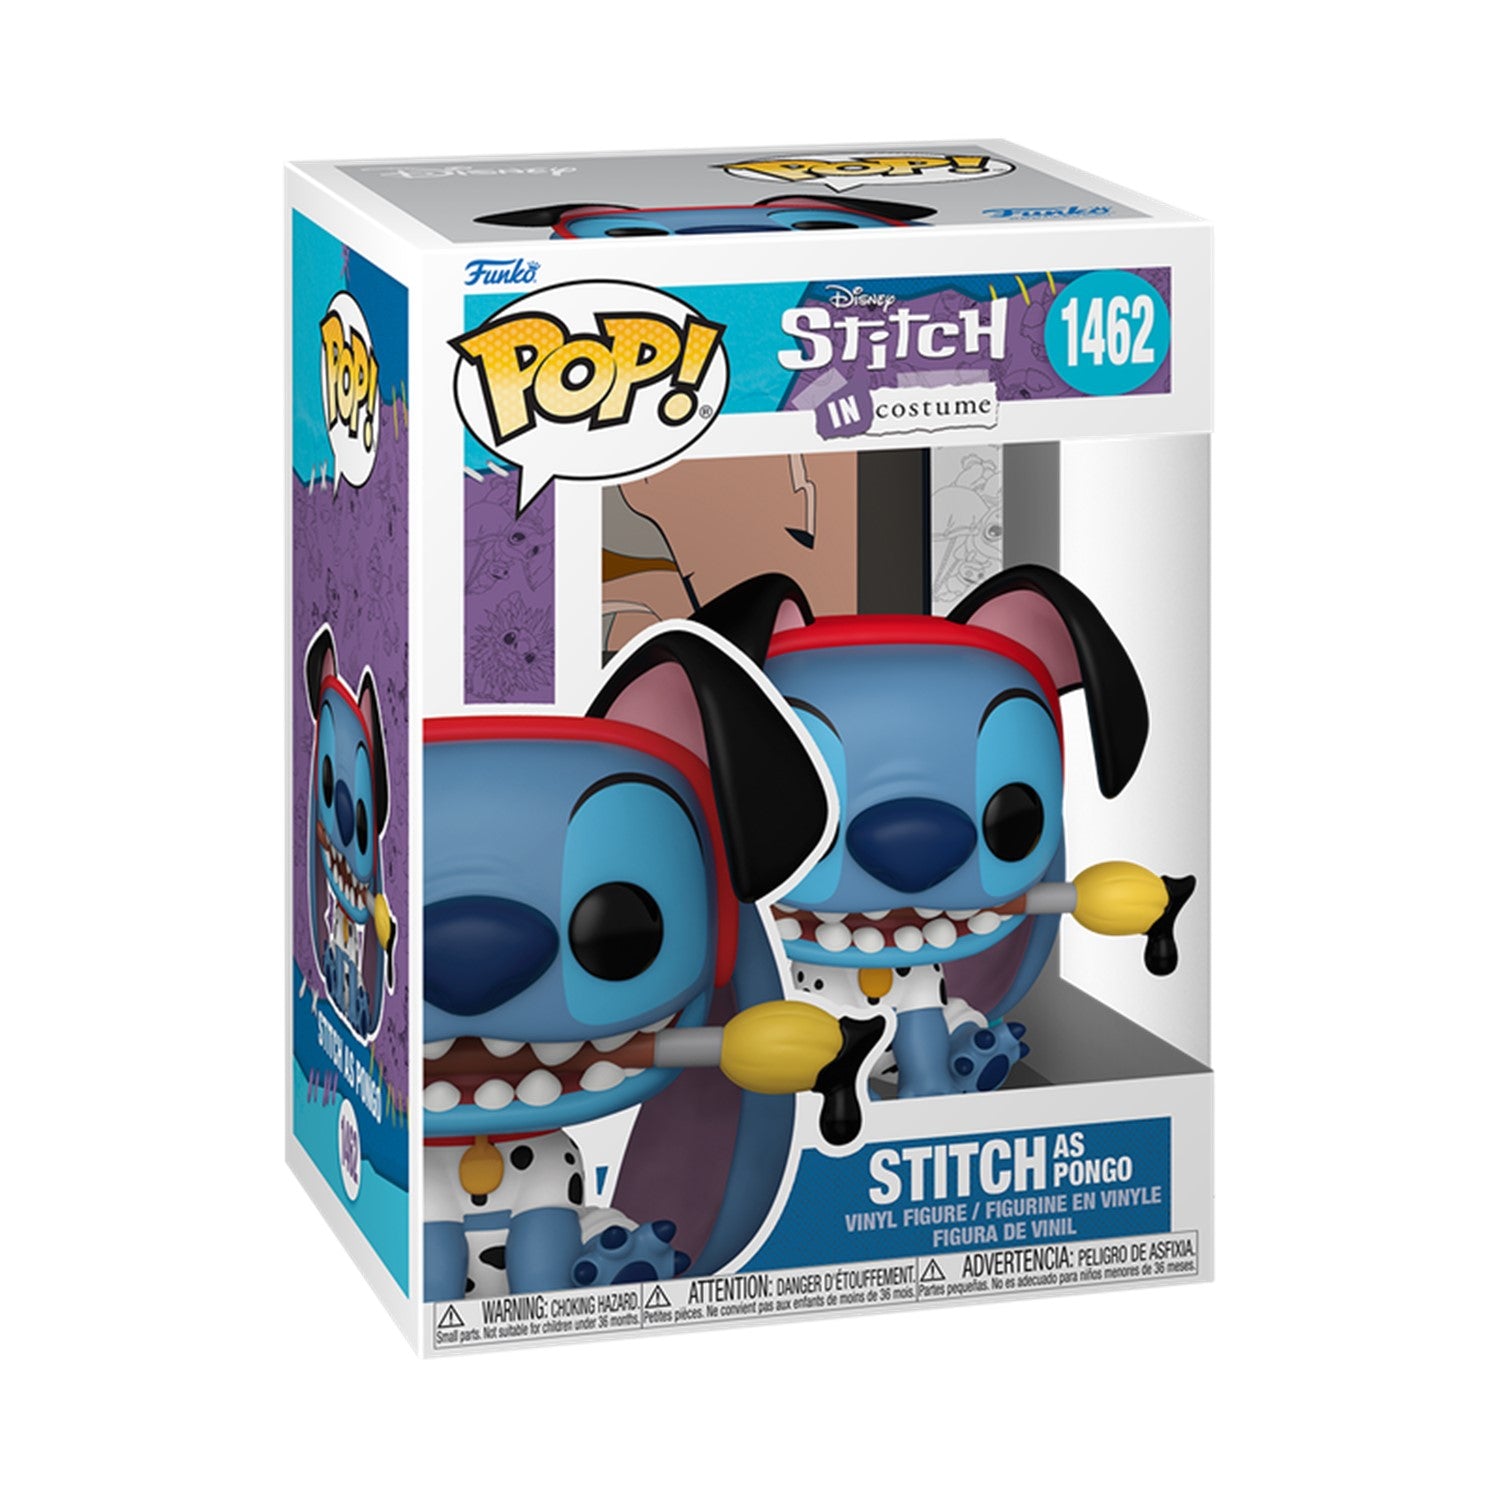 POP! Stitch as Pongo | L.A. Mood Comics and Games